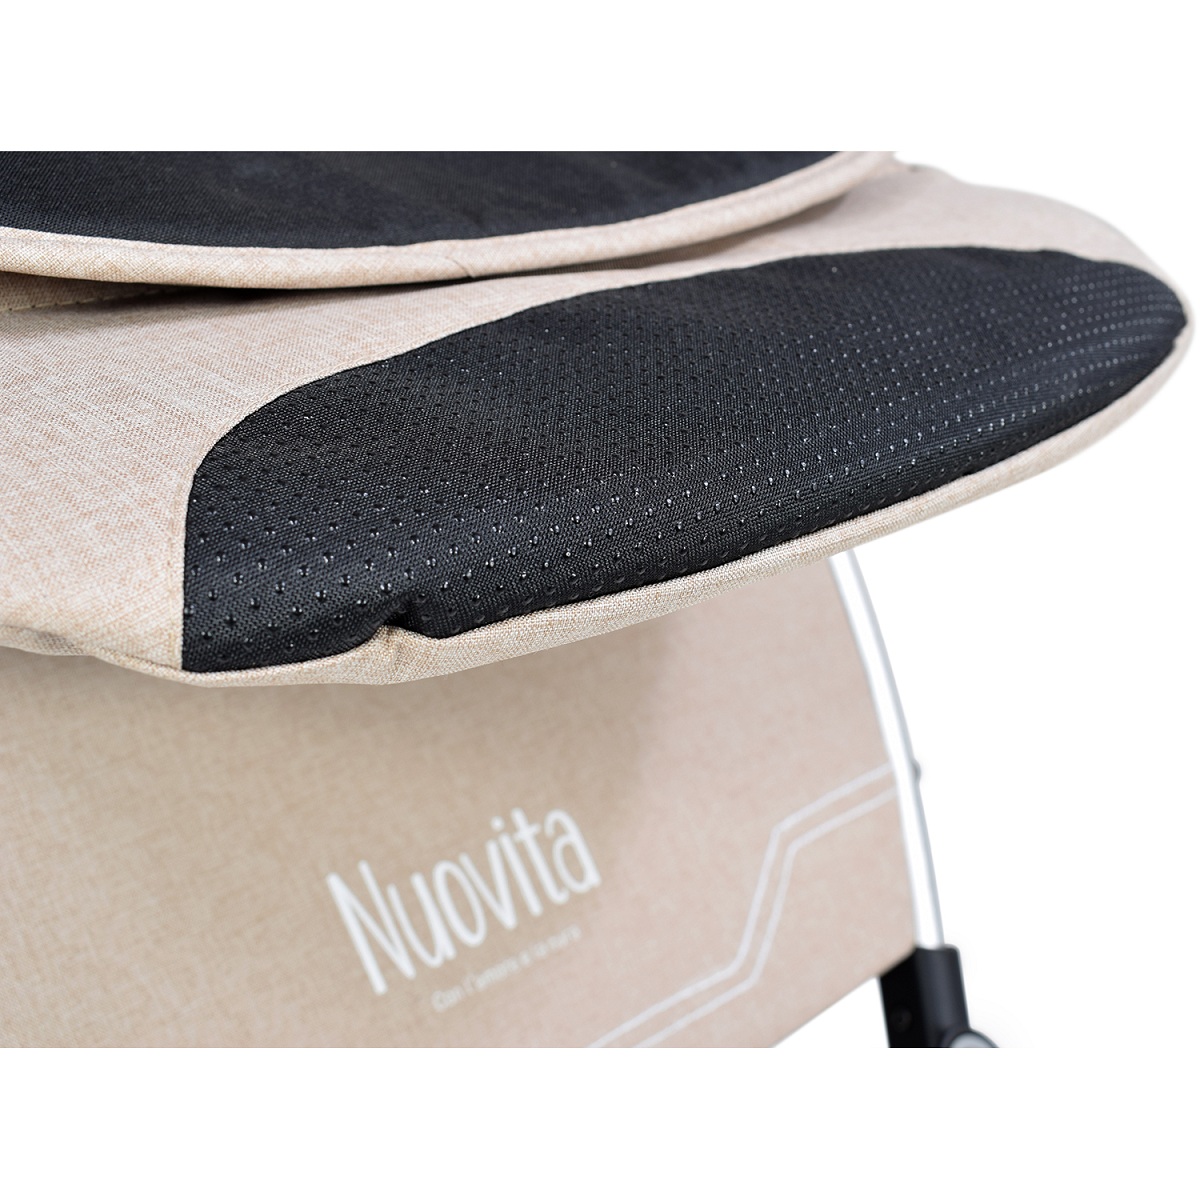 Прогулочная коляска Nuovita Giro, цвет серый, шасси черное  